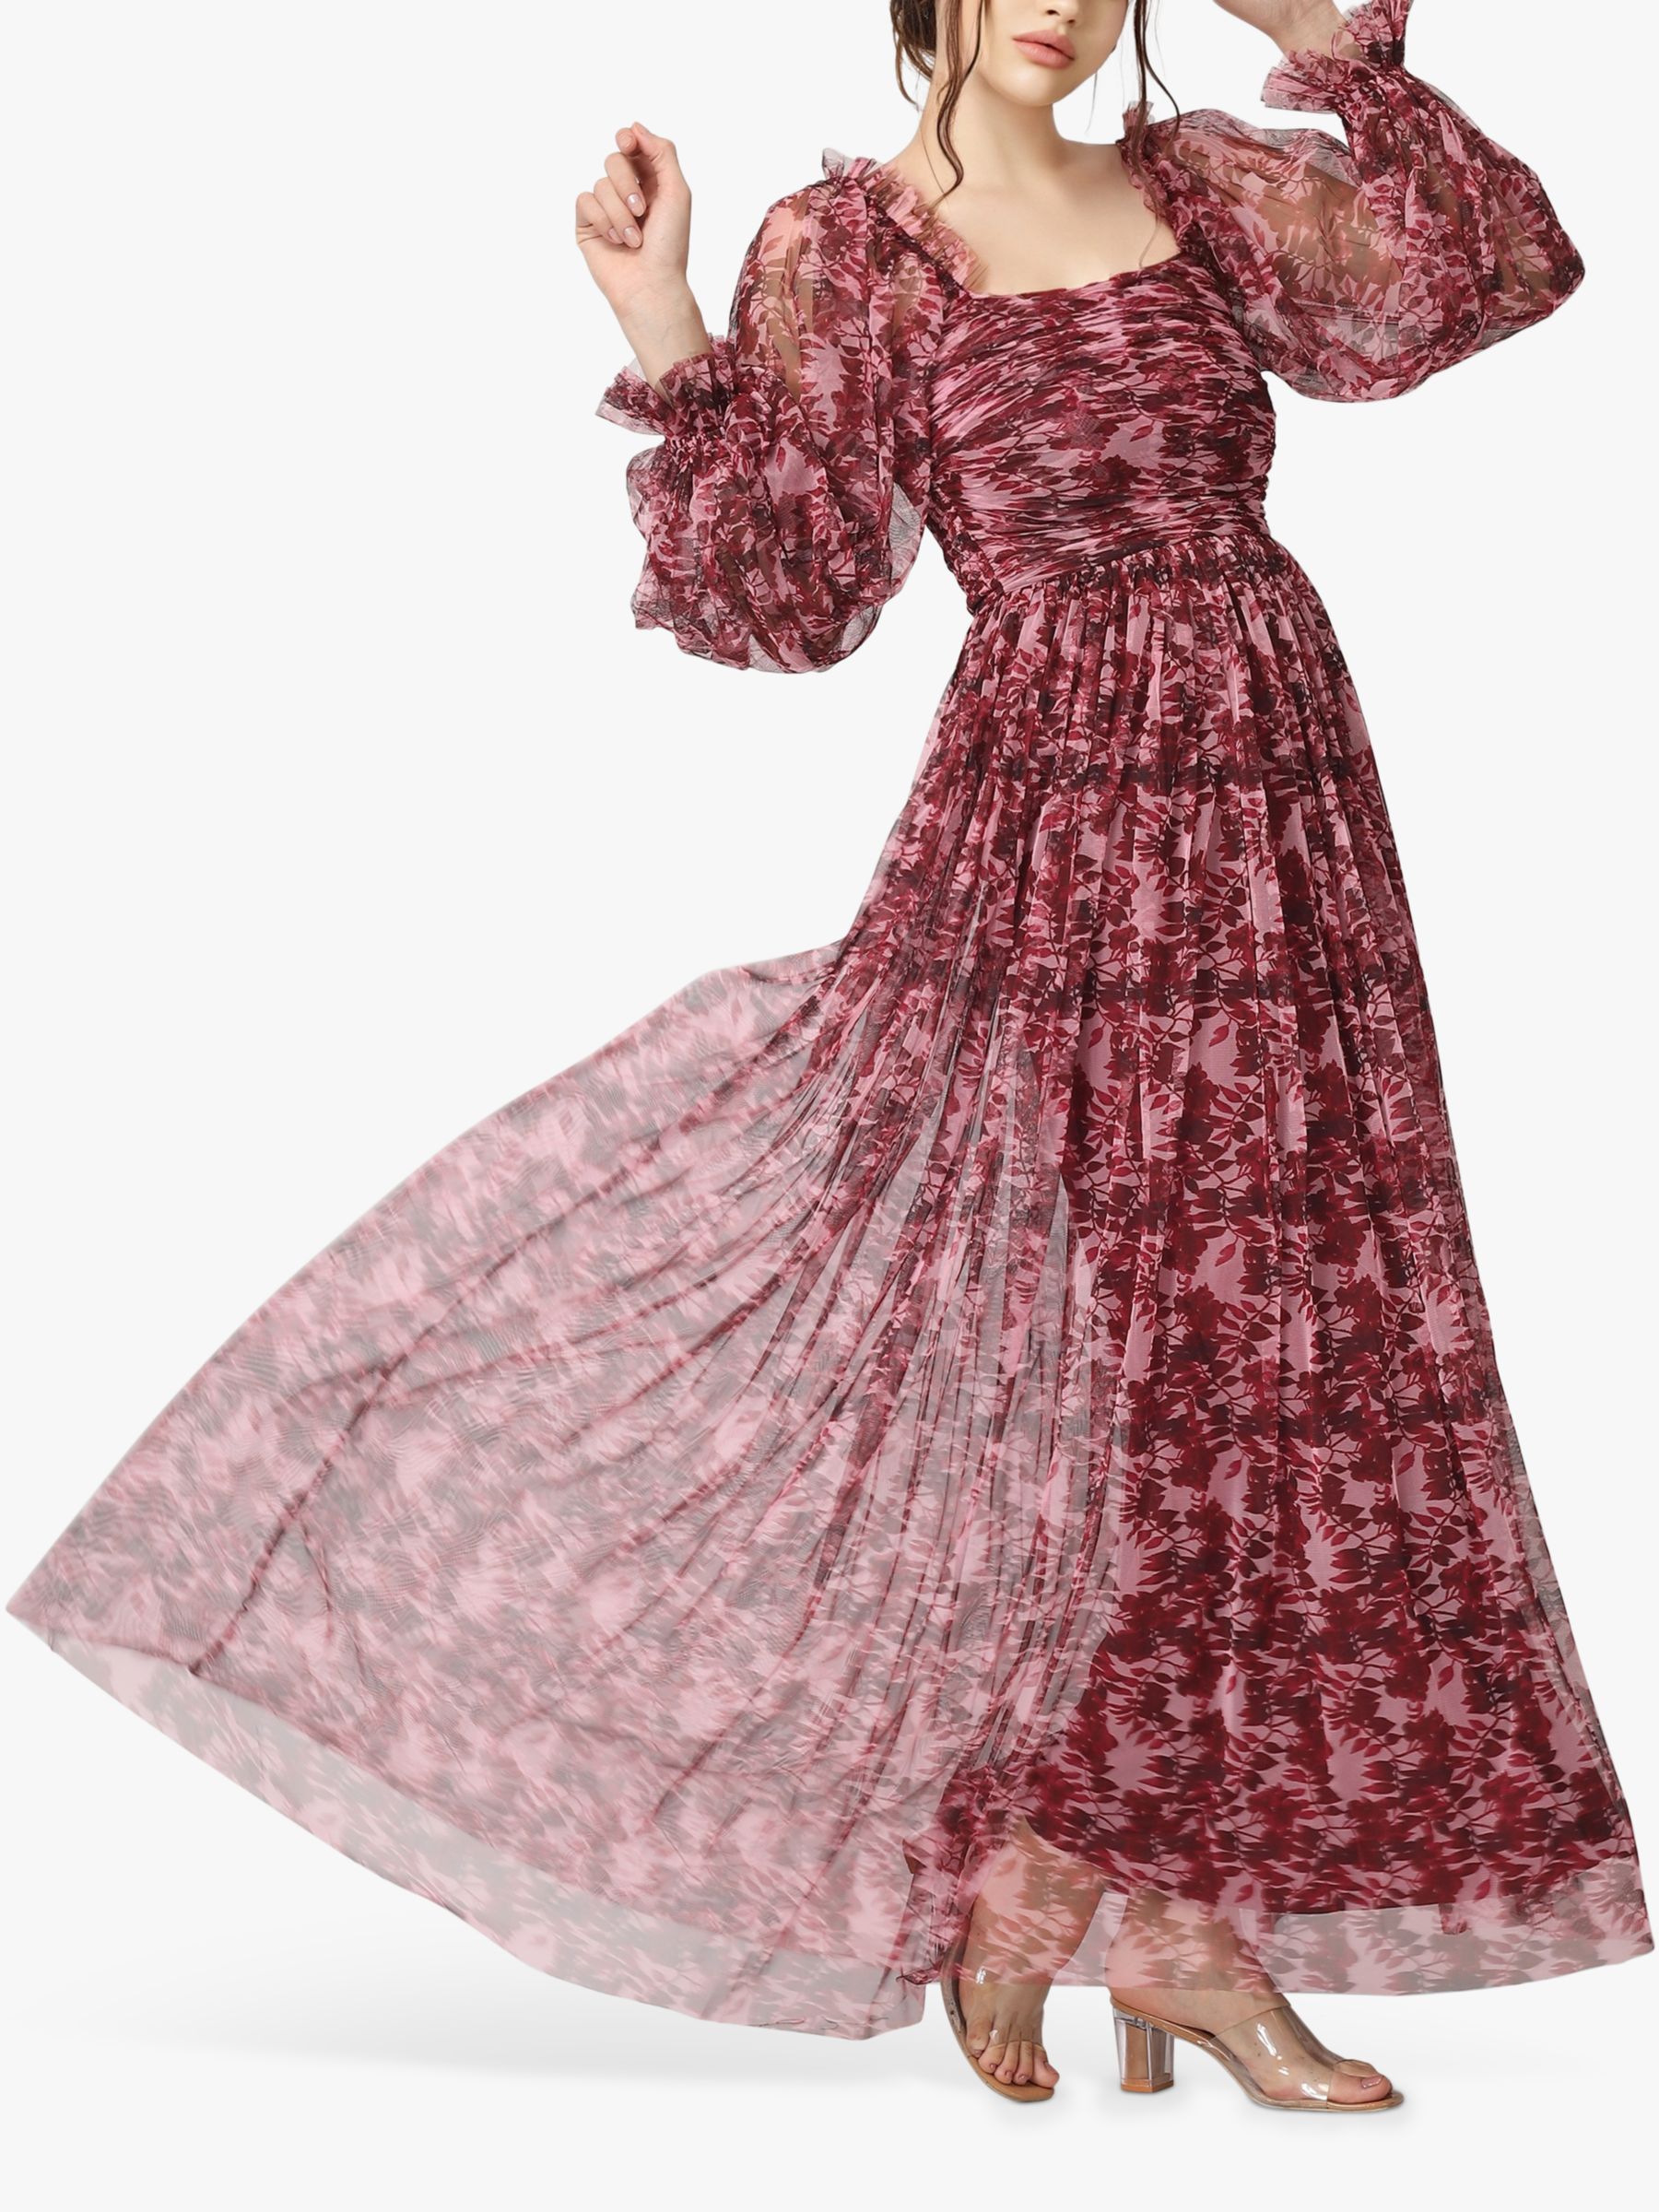 Lace & Beads Lana Floral Print Mesh Maxi Dress, Burgundy/Pink, 8